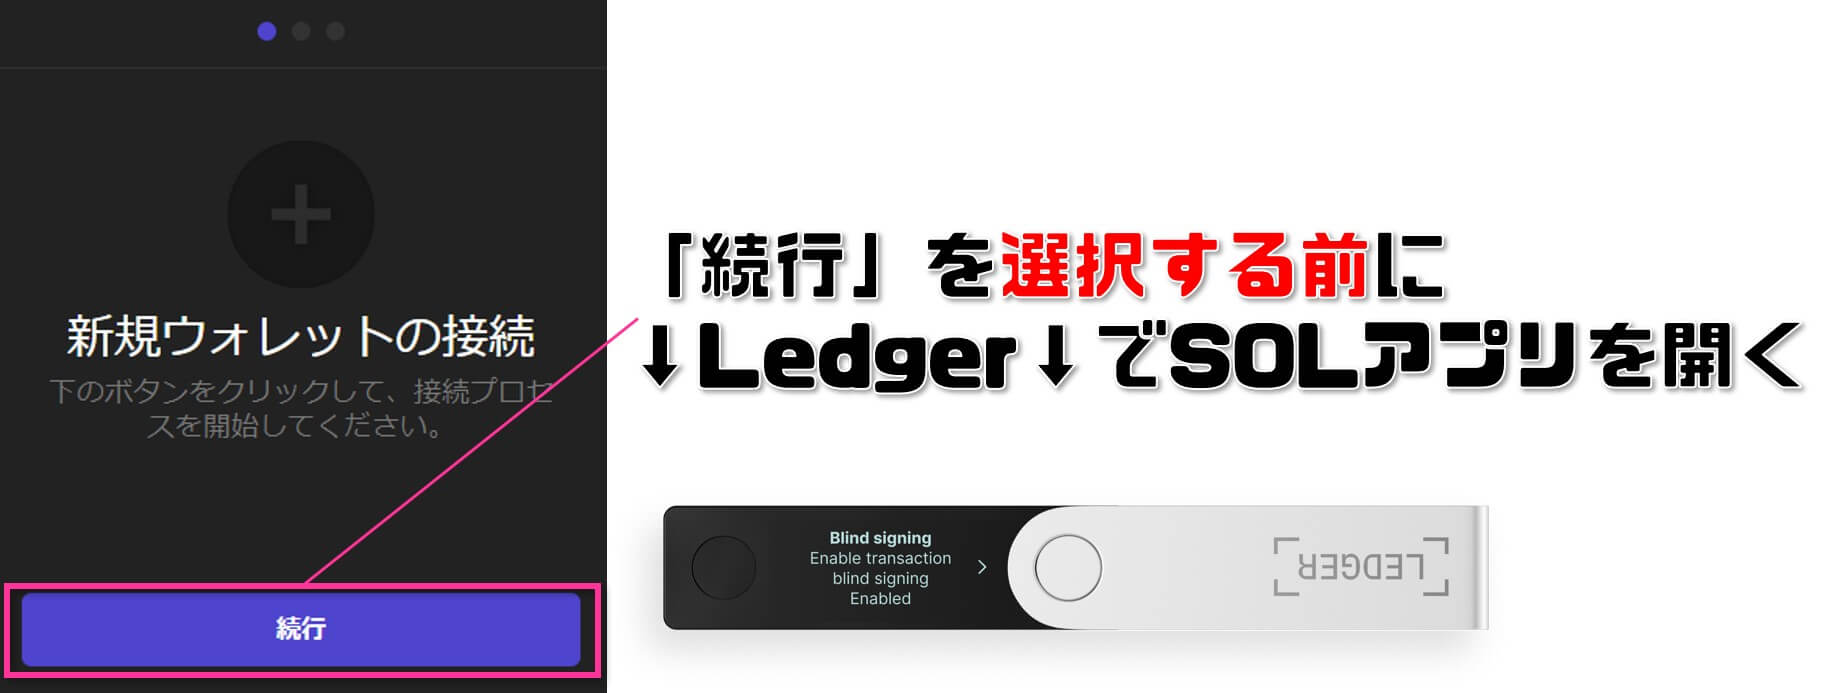 LedgerのSOLアプリを開いて接続すれば、ウォレットを作成